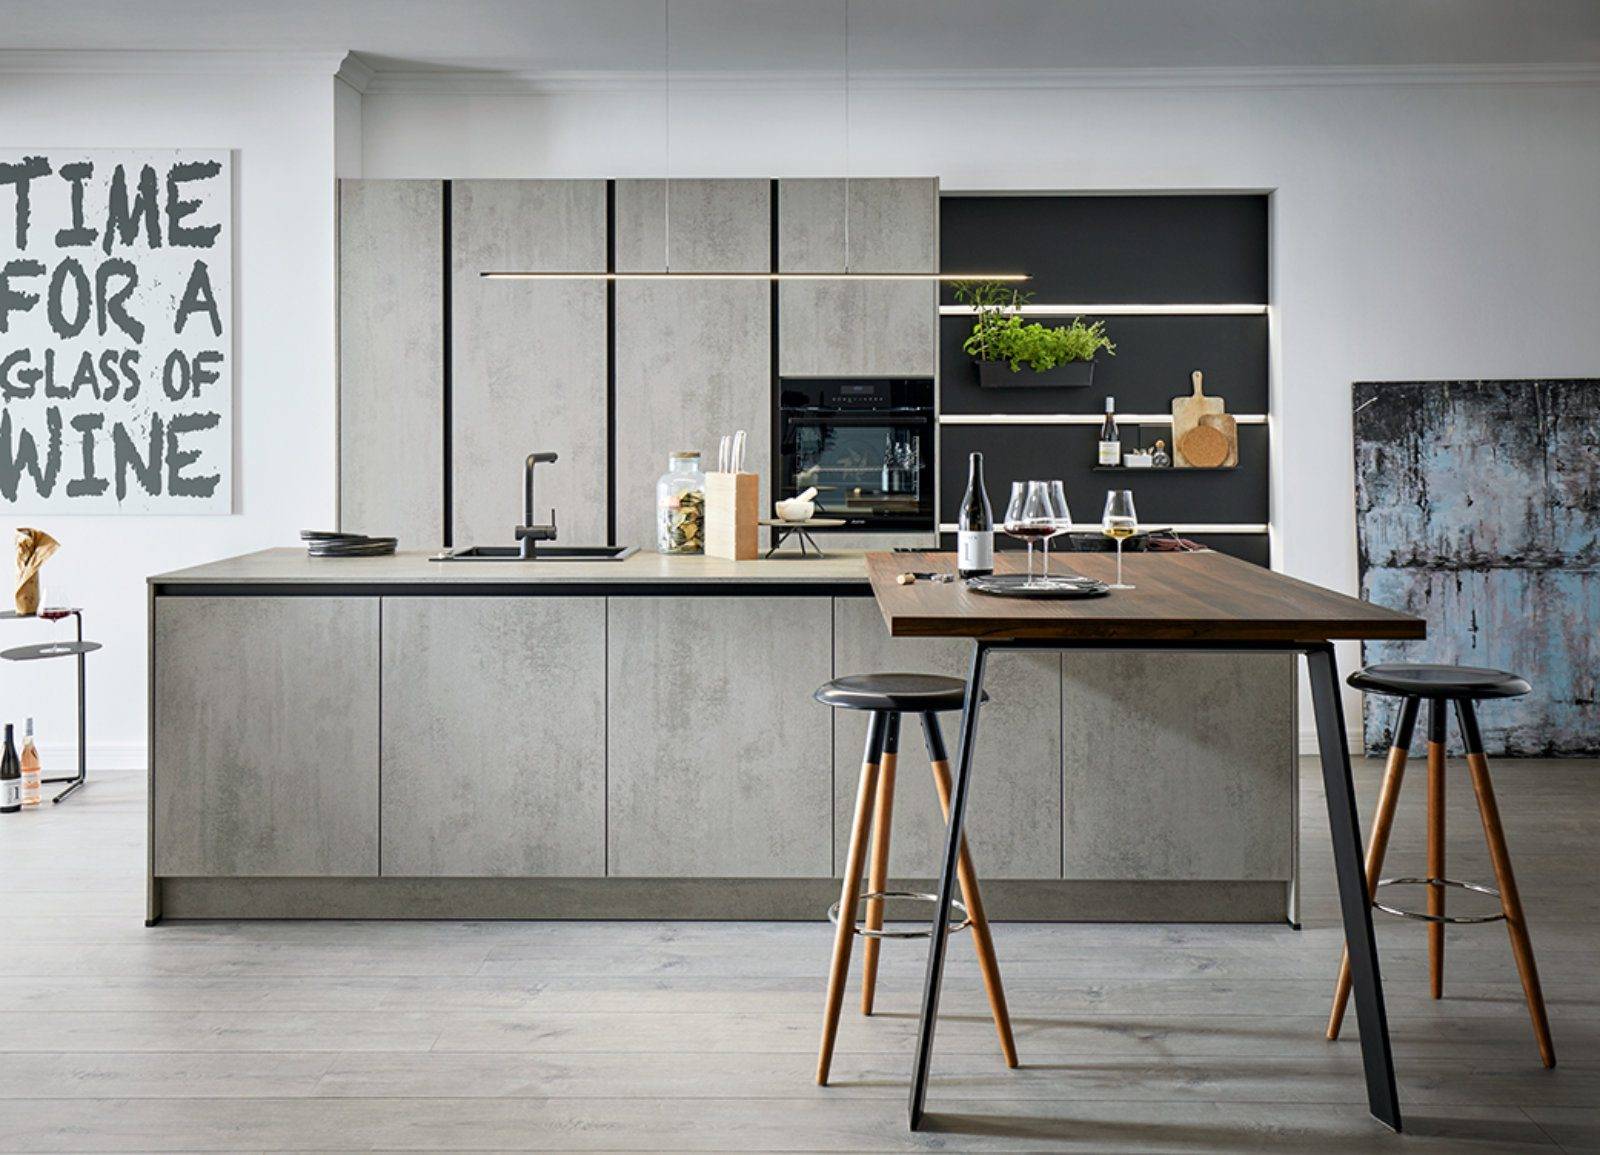 Schuller Concrete Modern Kitchen With Island 3 | House of Harrogate, Harrogate